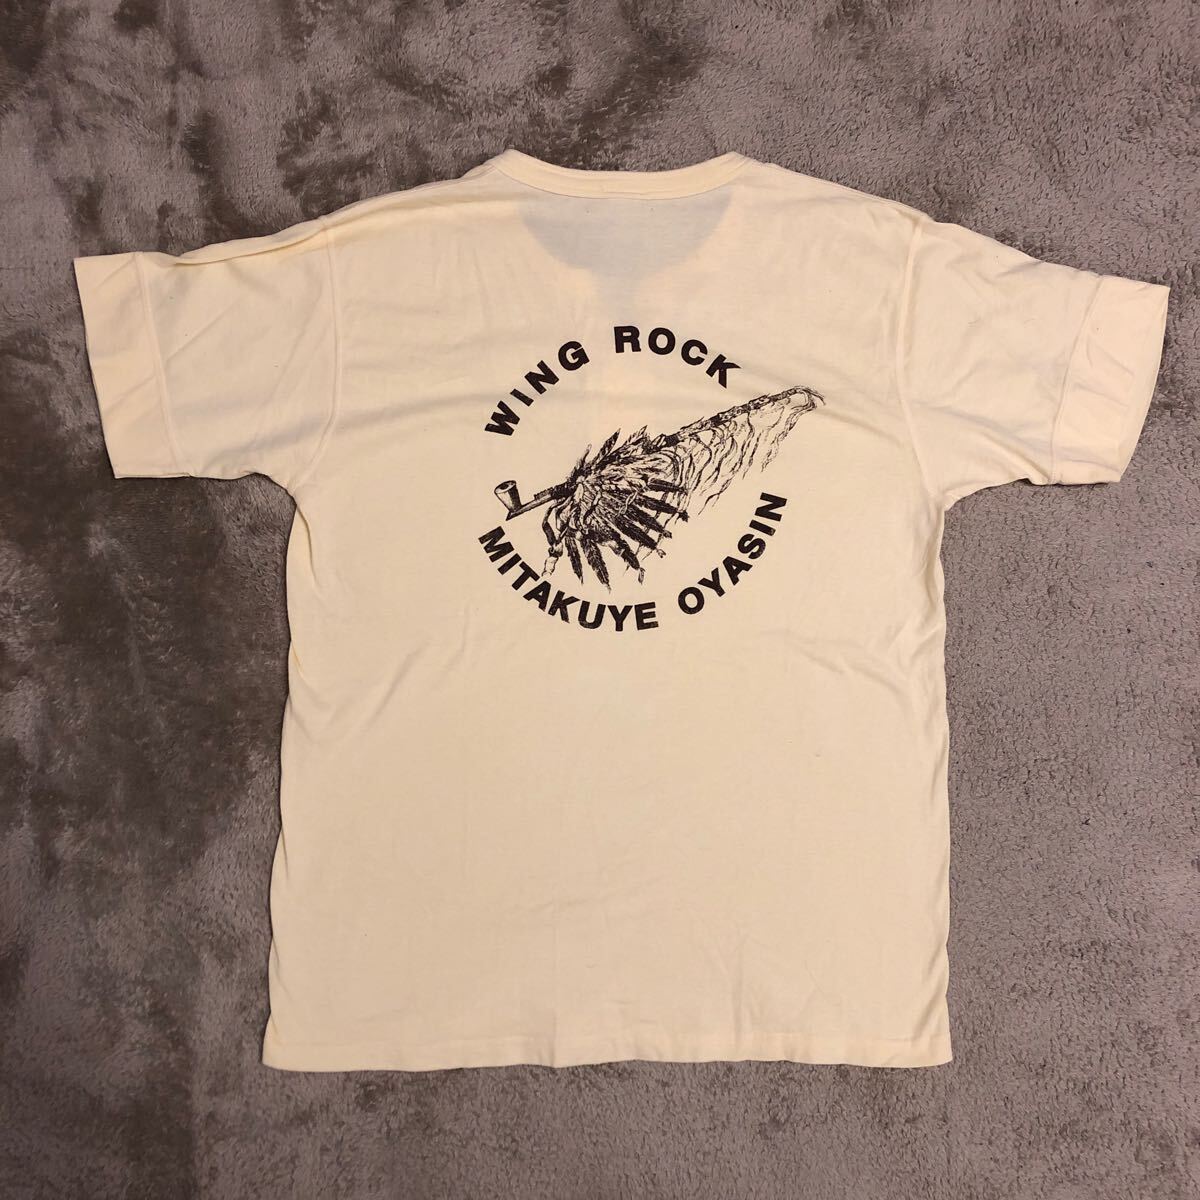  Vintage футболка wing блокировка Navajo chimayo OLTE (Optical Line Transmission Equipment) ga см ne погремушка fili мужской Lynn chi серебряный Smith wing Rock 80s 90s